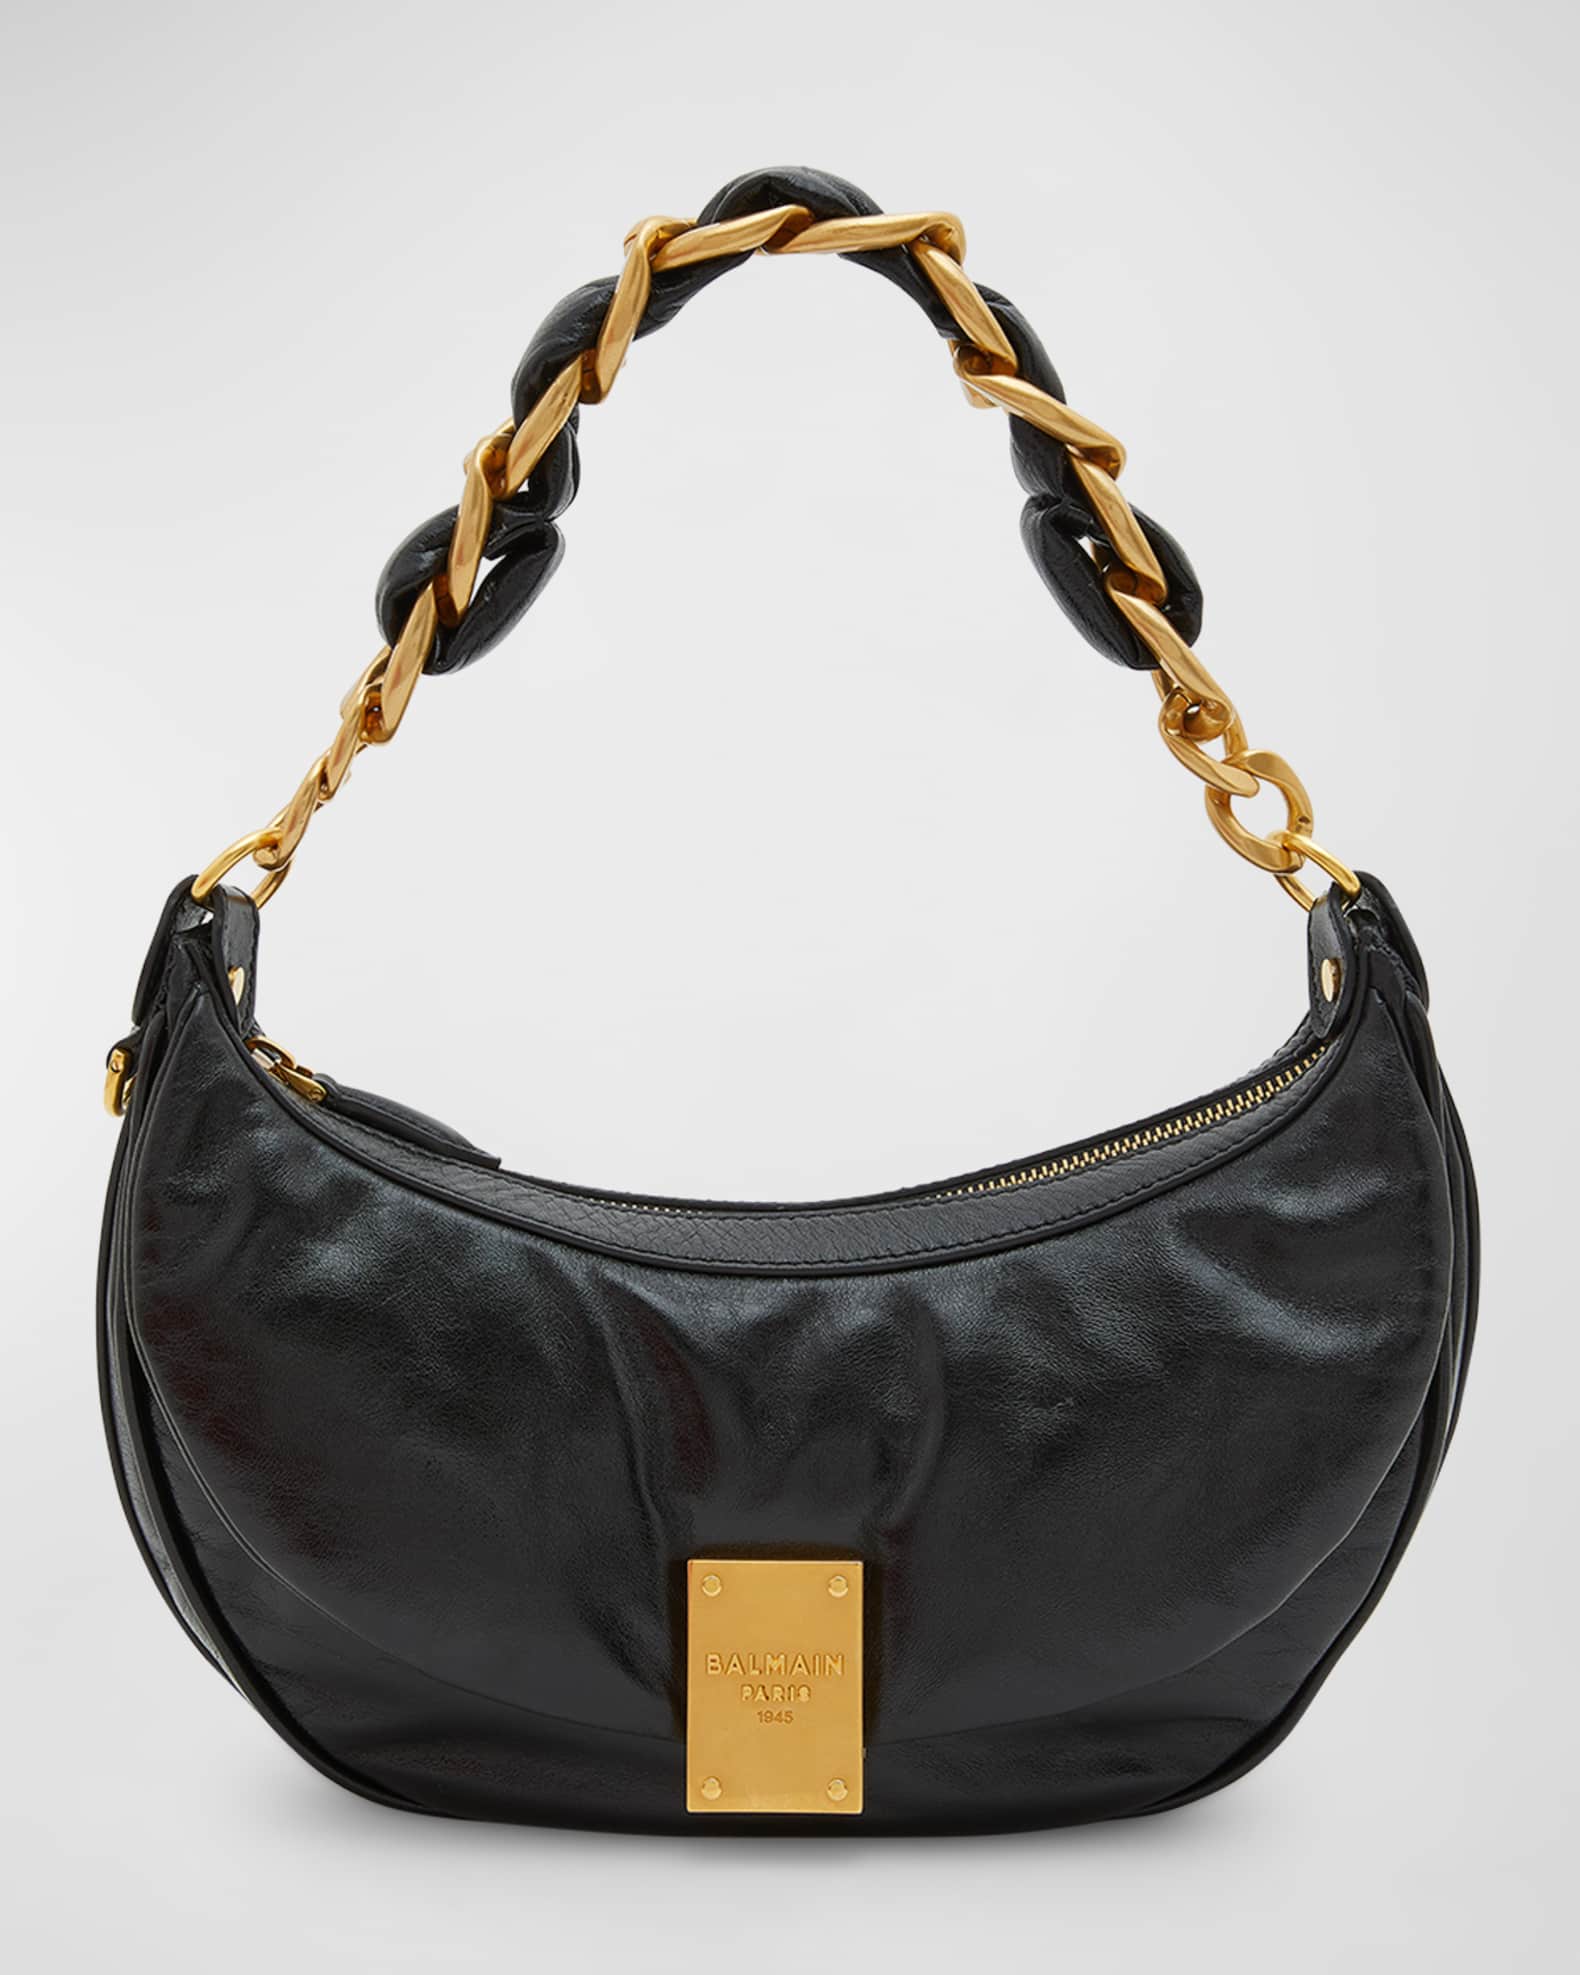 Louis Vuitton Bag Jewelry Exceptional Chain Handbag Ladylike 